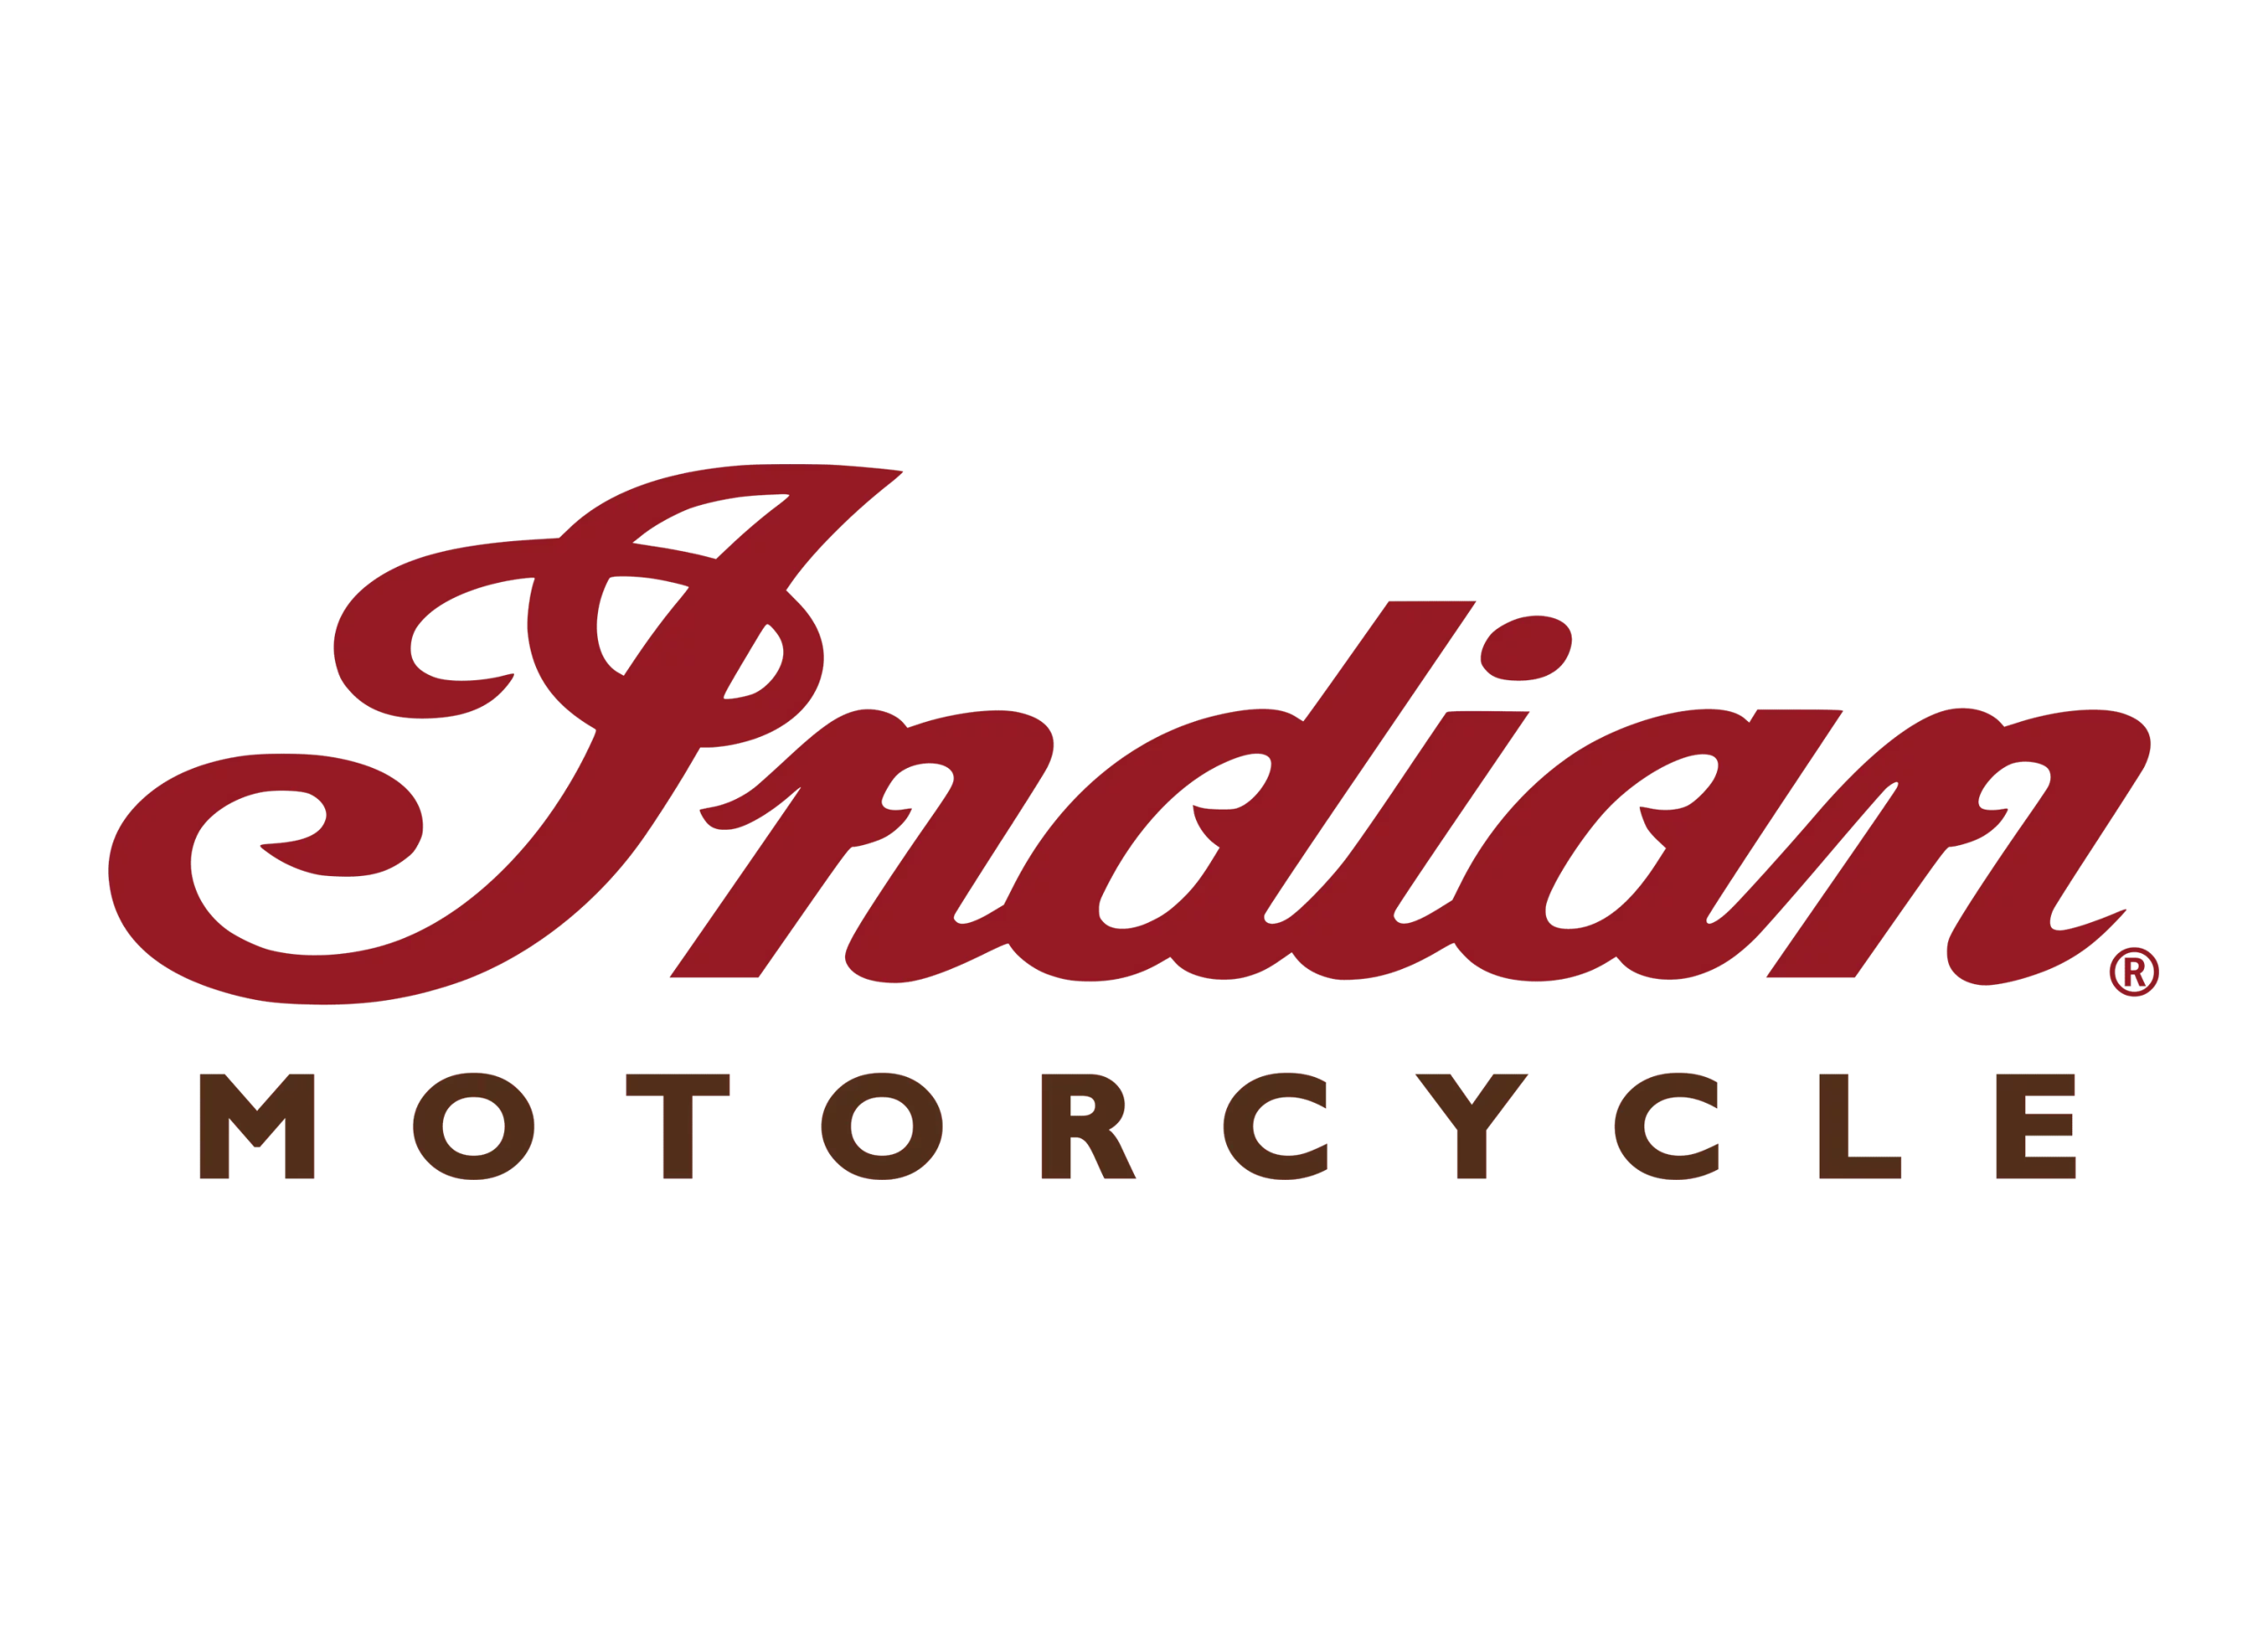 Indian Motorcycle logo present